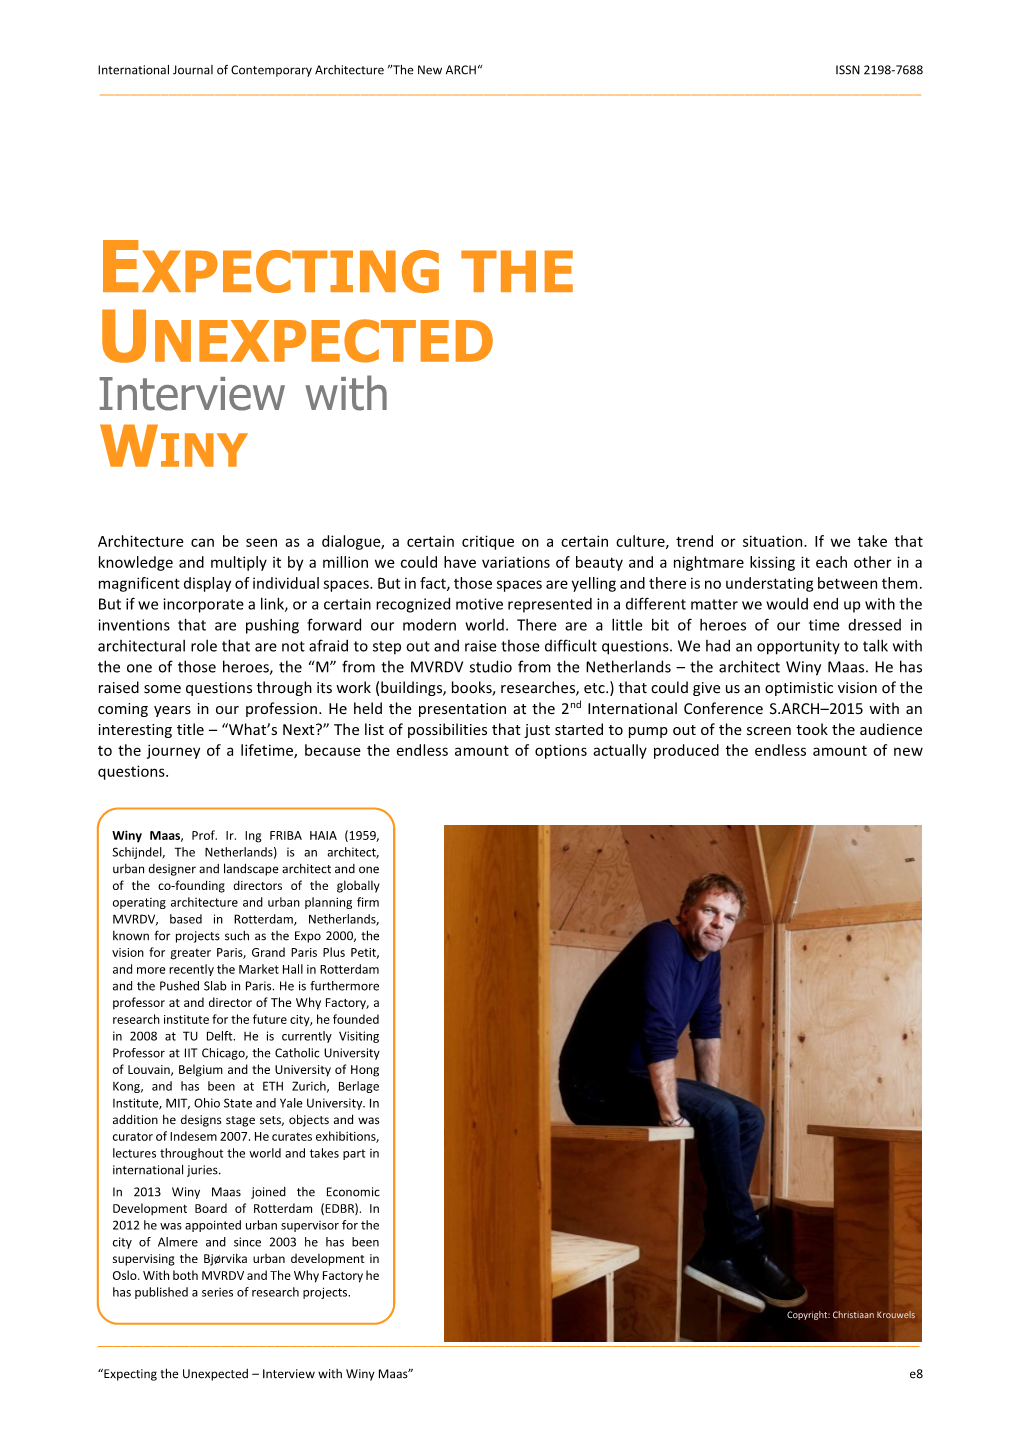 Interview with Winy Maas MVRDV